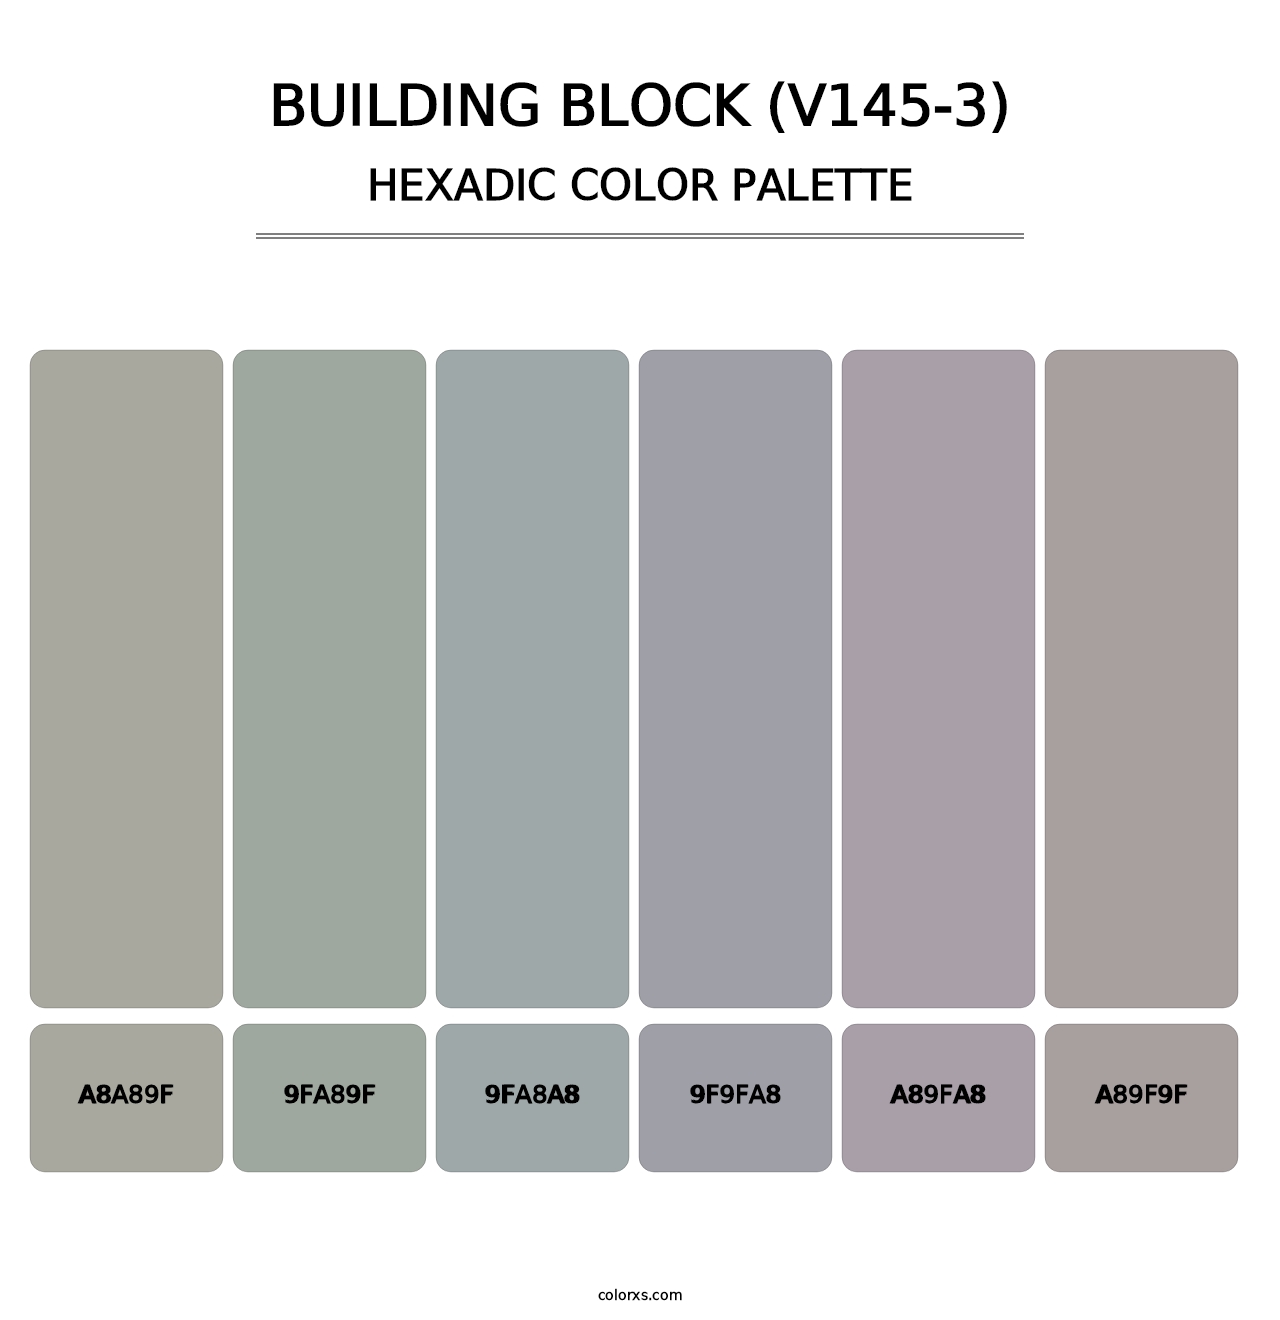 Building Block (V145-3) - Hexadic Color Palette